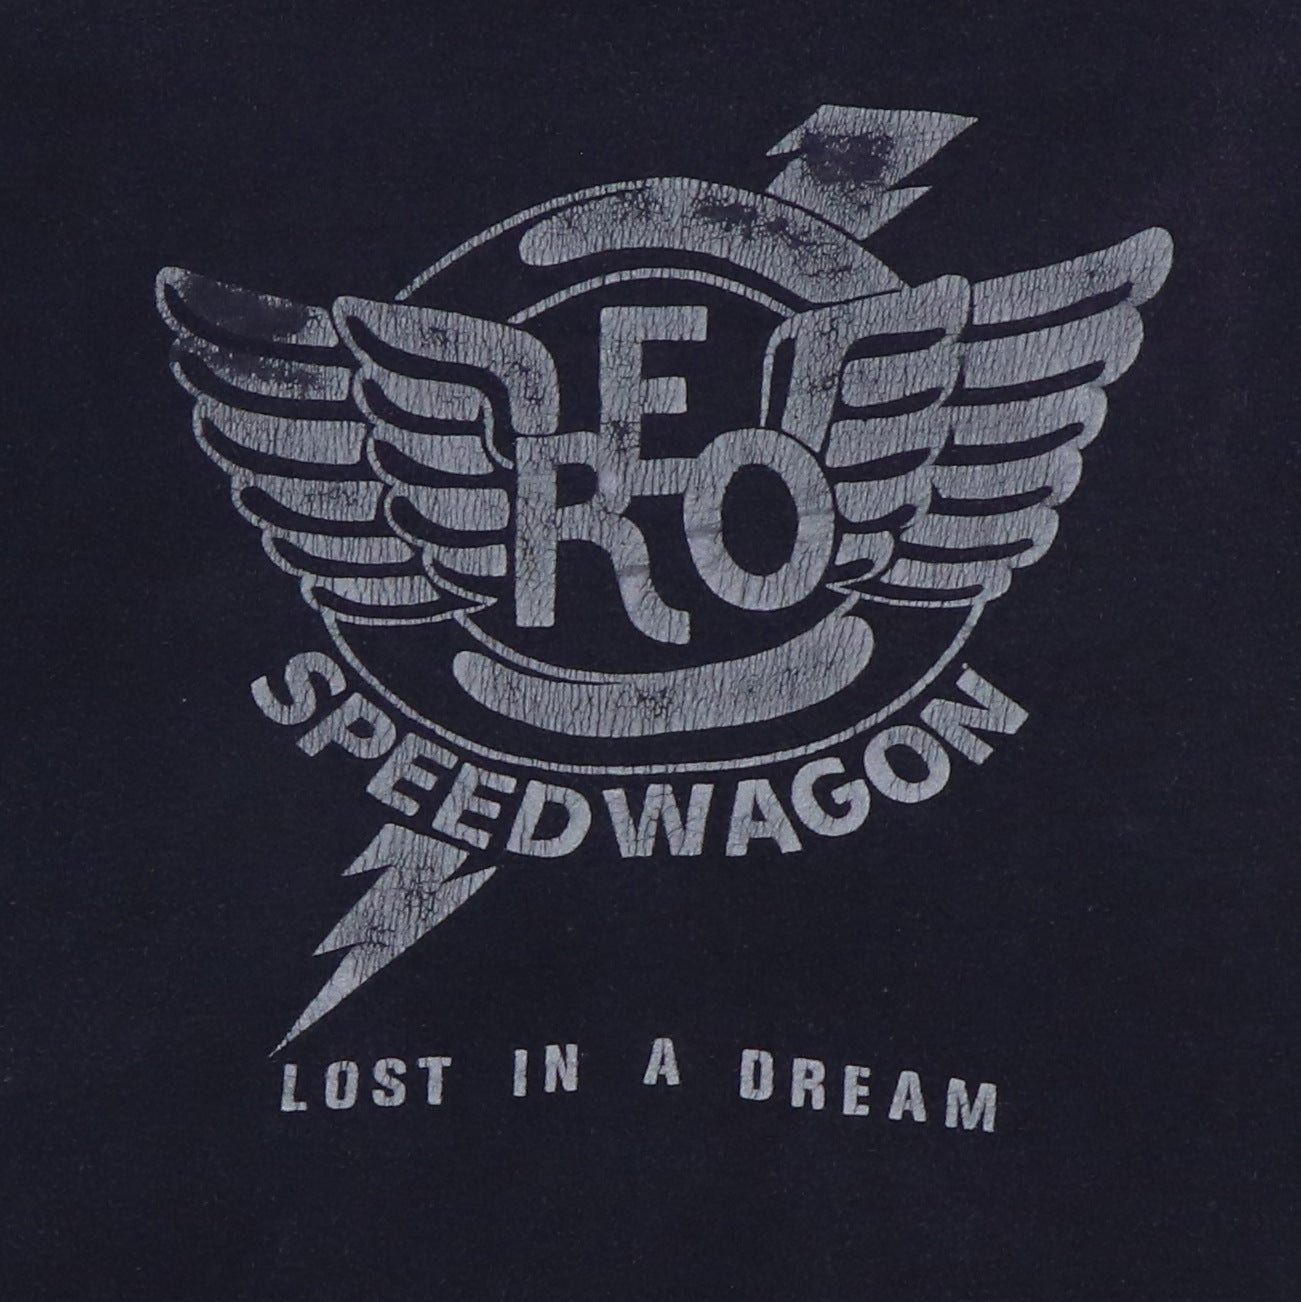 1974 REO Speedwagon Lost In A Dream Tour Shirt